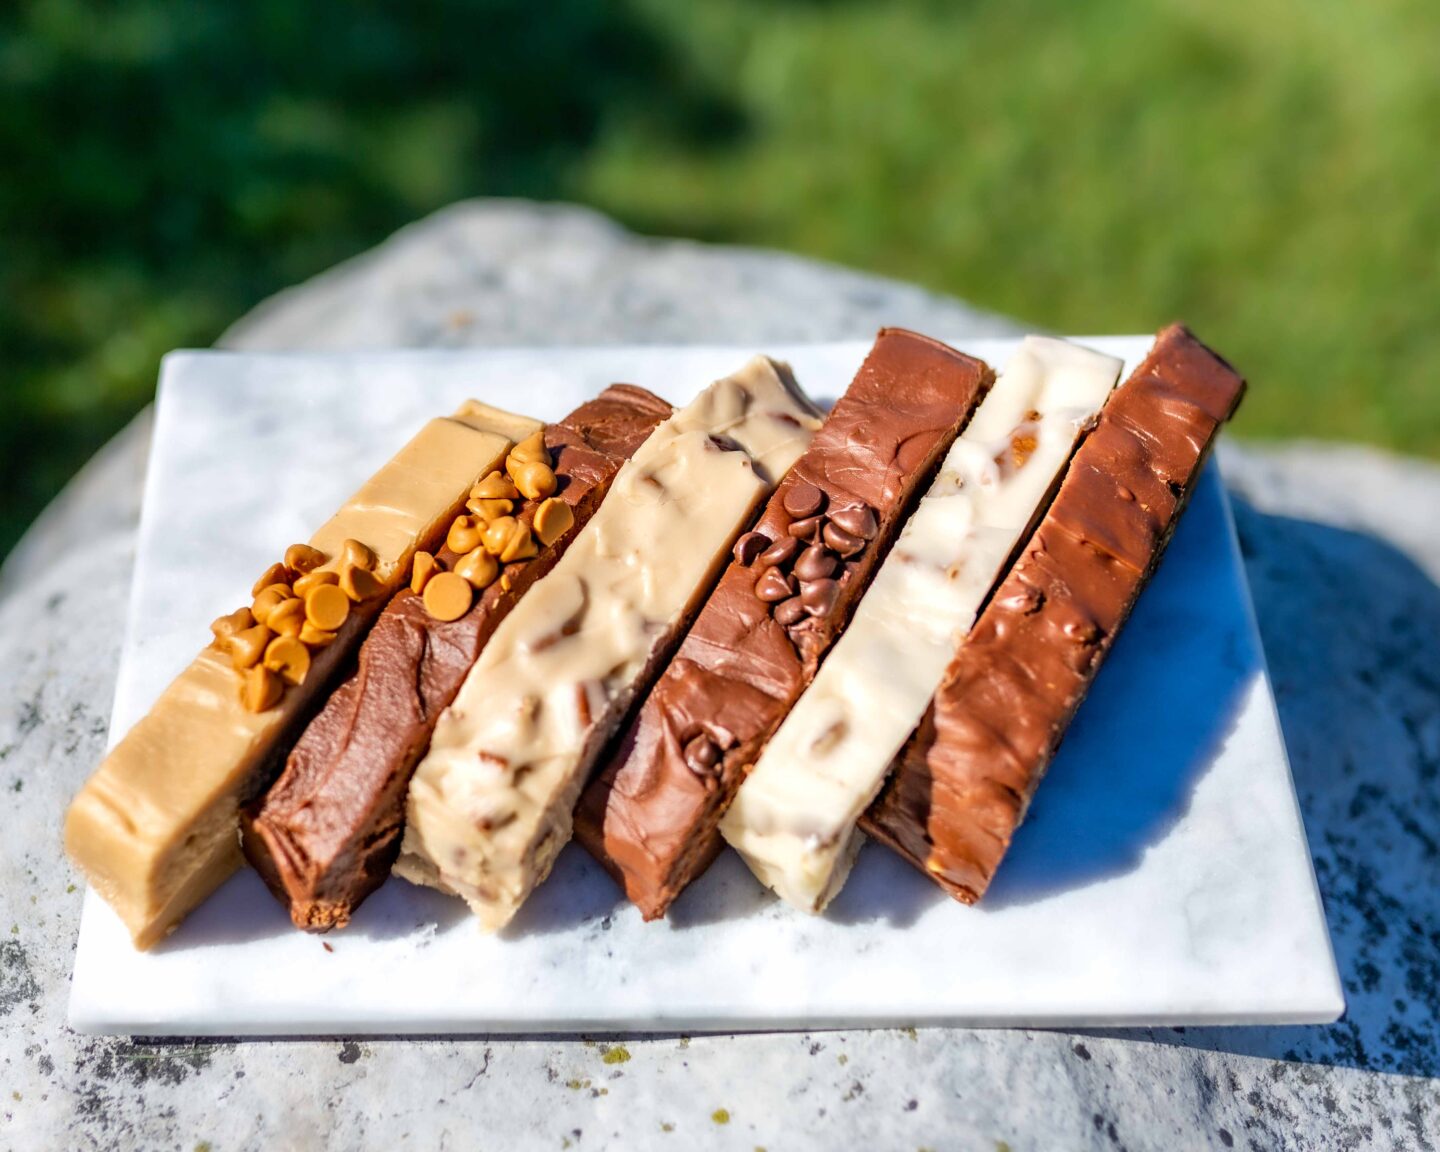 Six Slices of Mackinac Island Fudge from Ryba's Fudge Shop